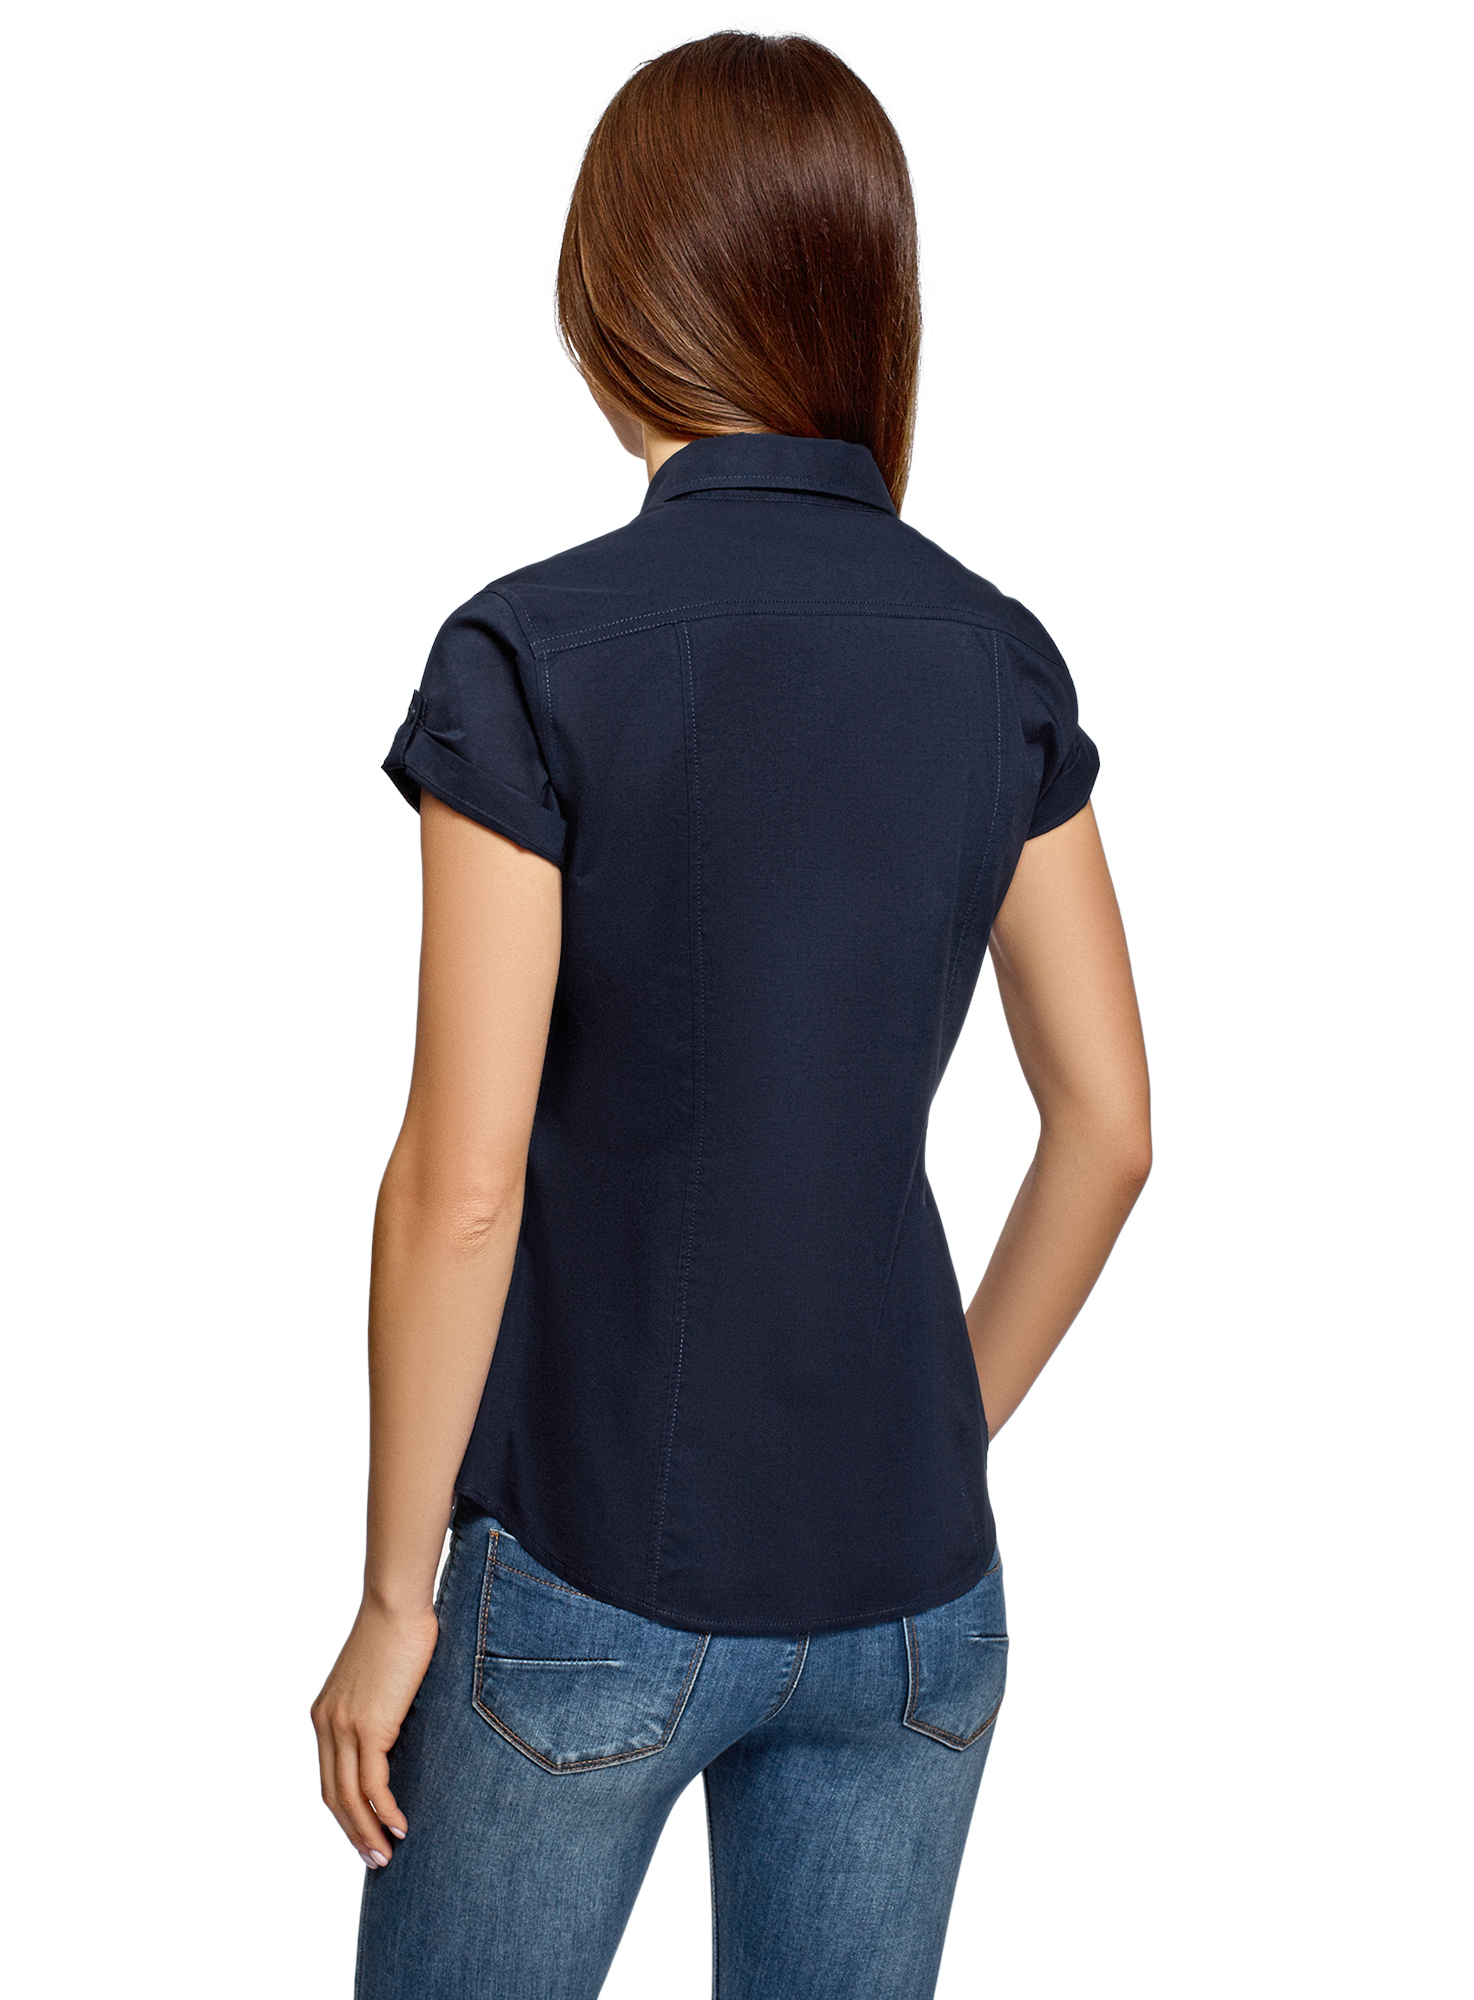 Рубашка женская oodji 13L02001-1B синяя 34 EU